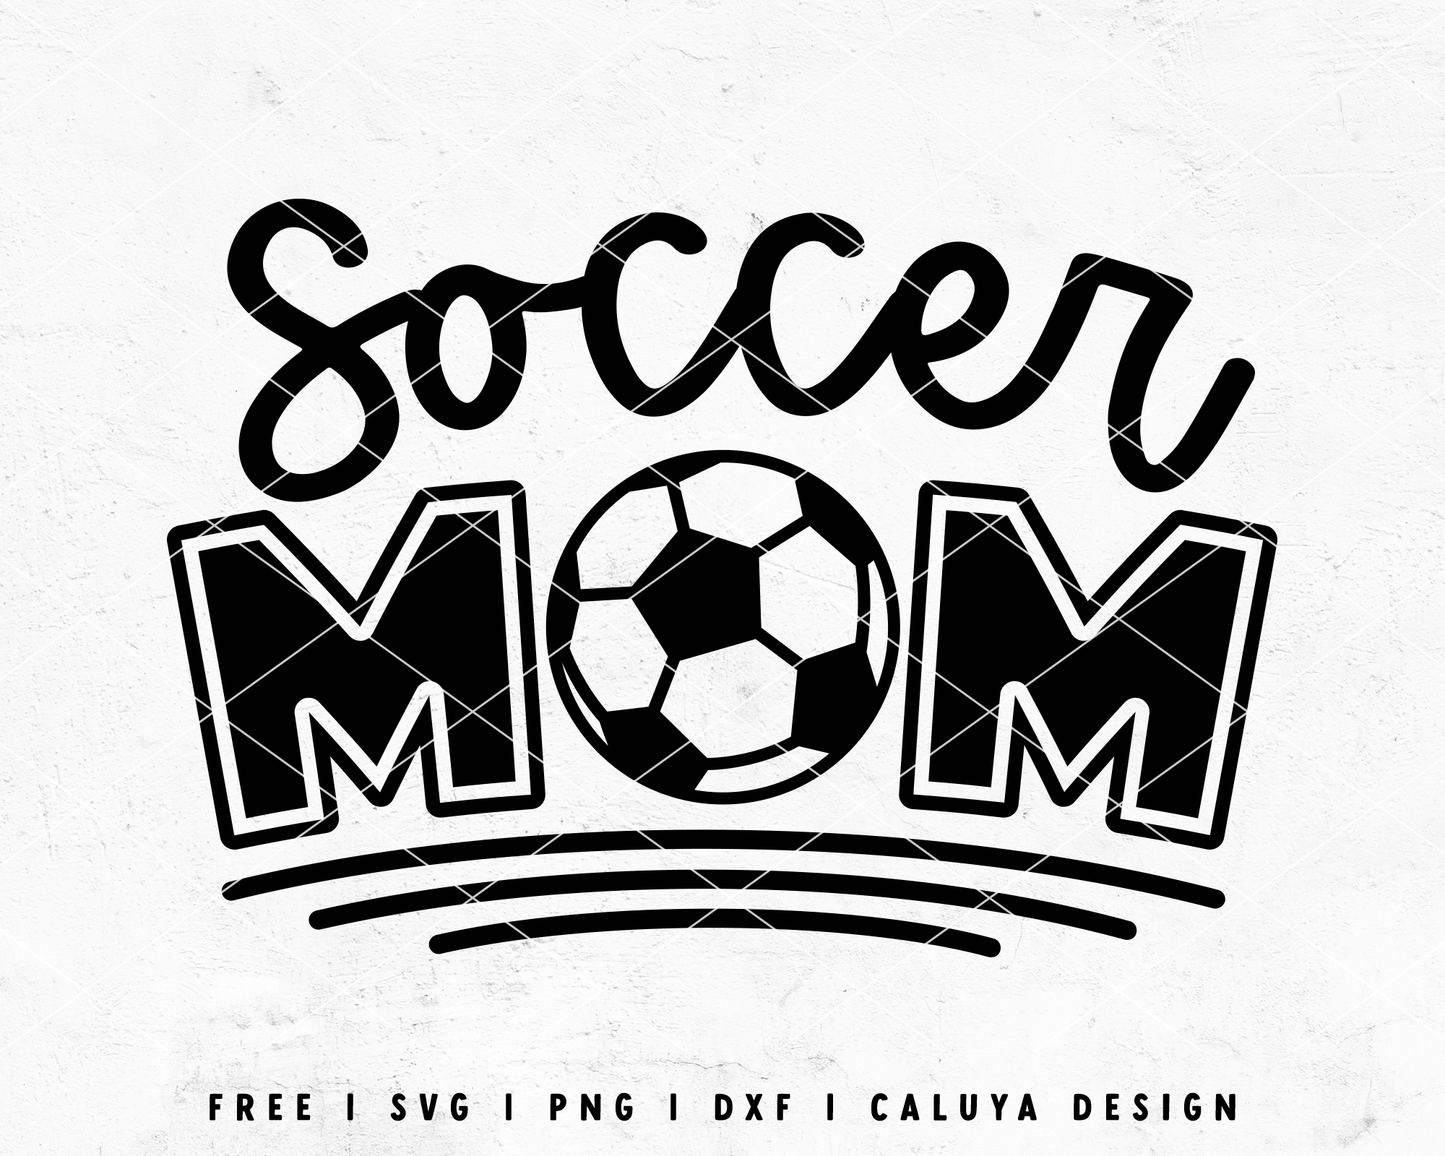 FREE Mom SVG | Soccer Mom SVG | Mom Life SVG Cut File for Cricut, Cameo Silhouette | Free SVG Cut File